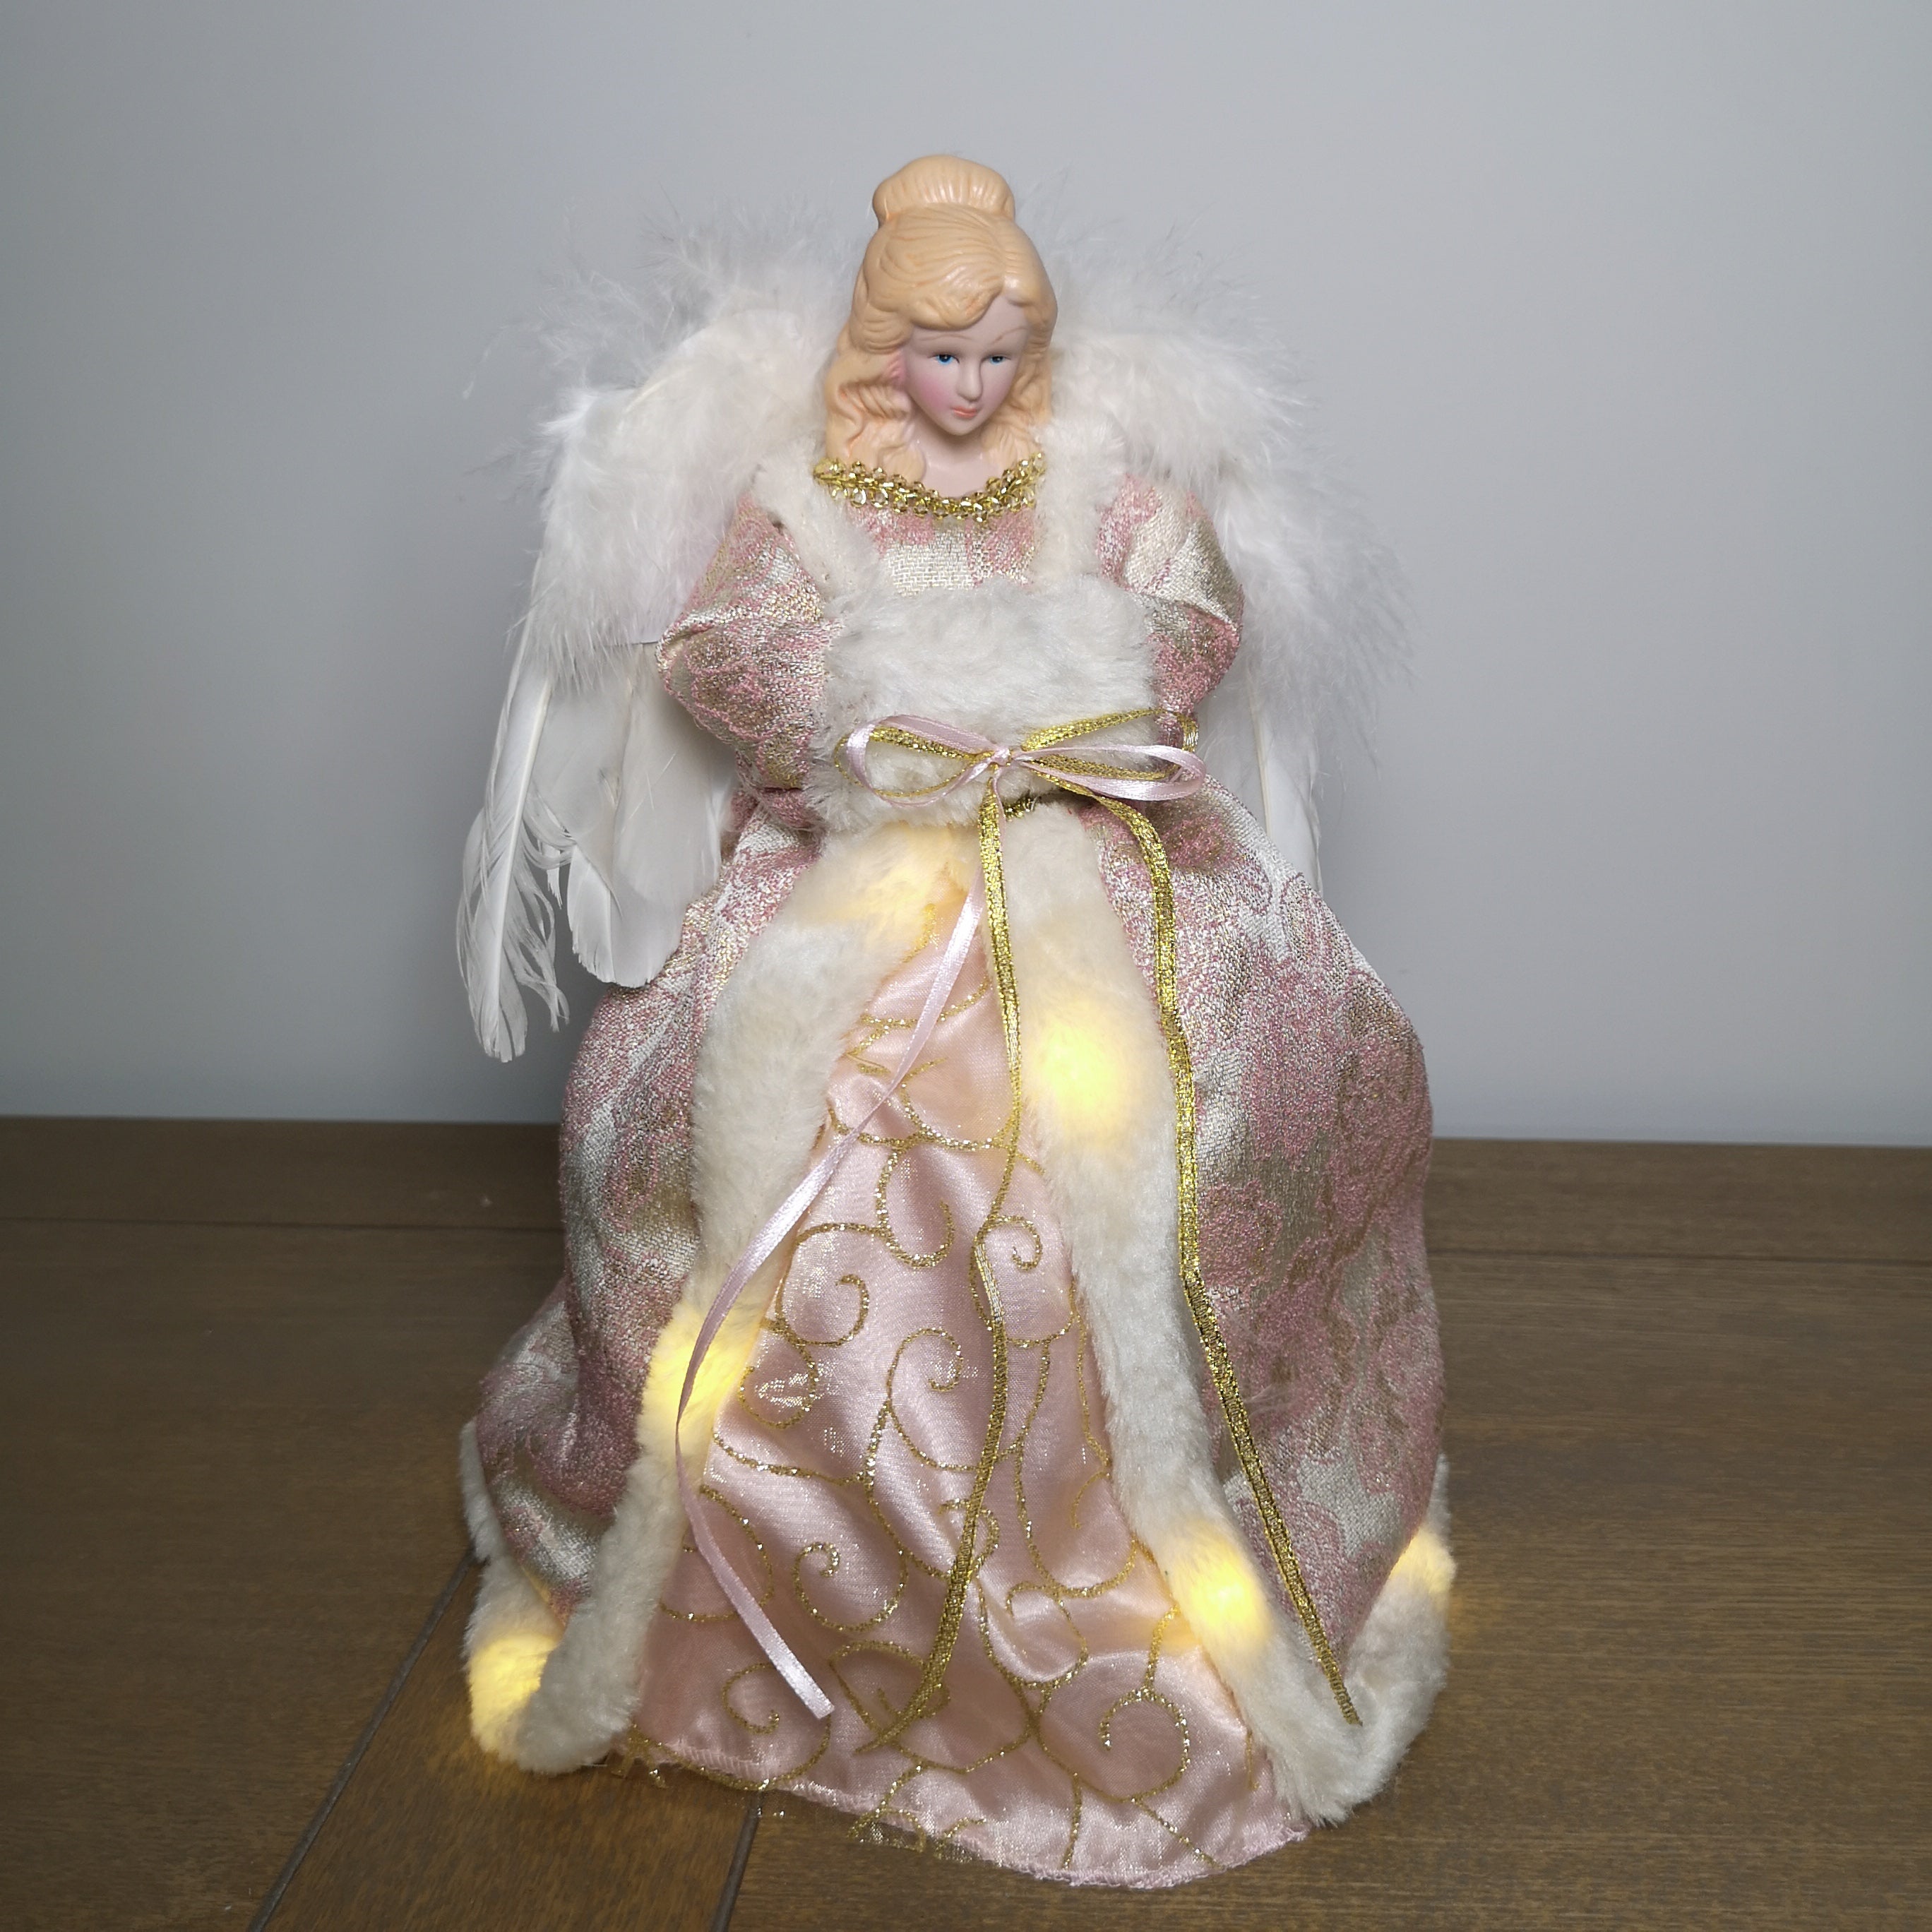 30cm Premier Christmas LED Lit Rose Gold Angel Tree Topper Decoration in Warm White